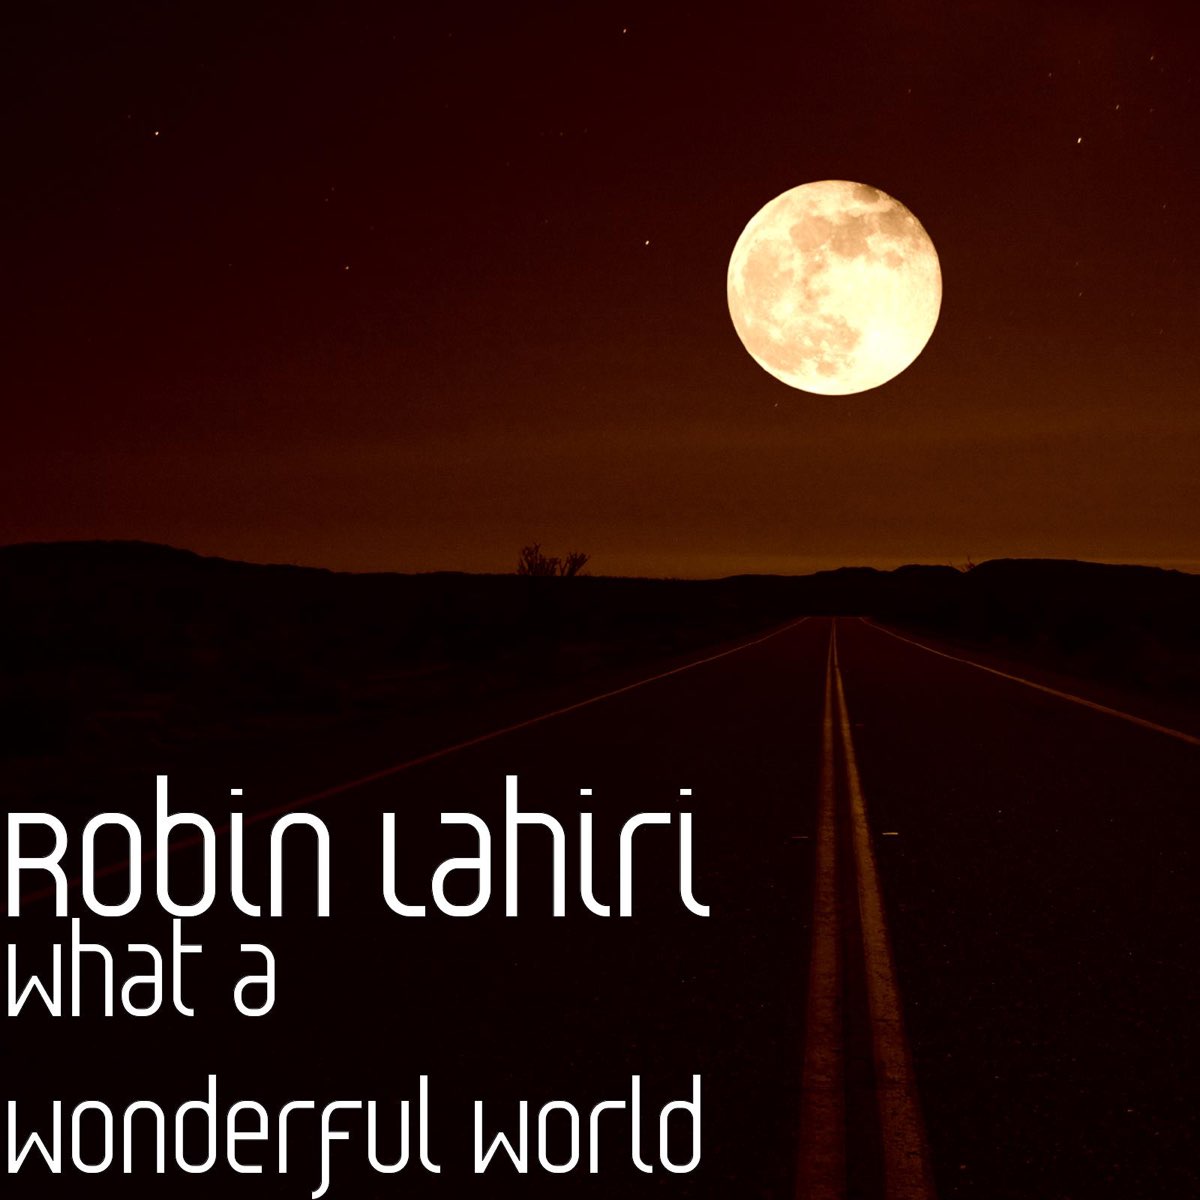 Welcome to my world robin. Wonderful World.